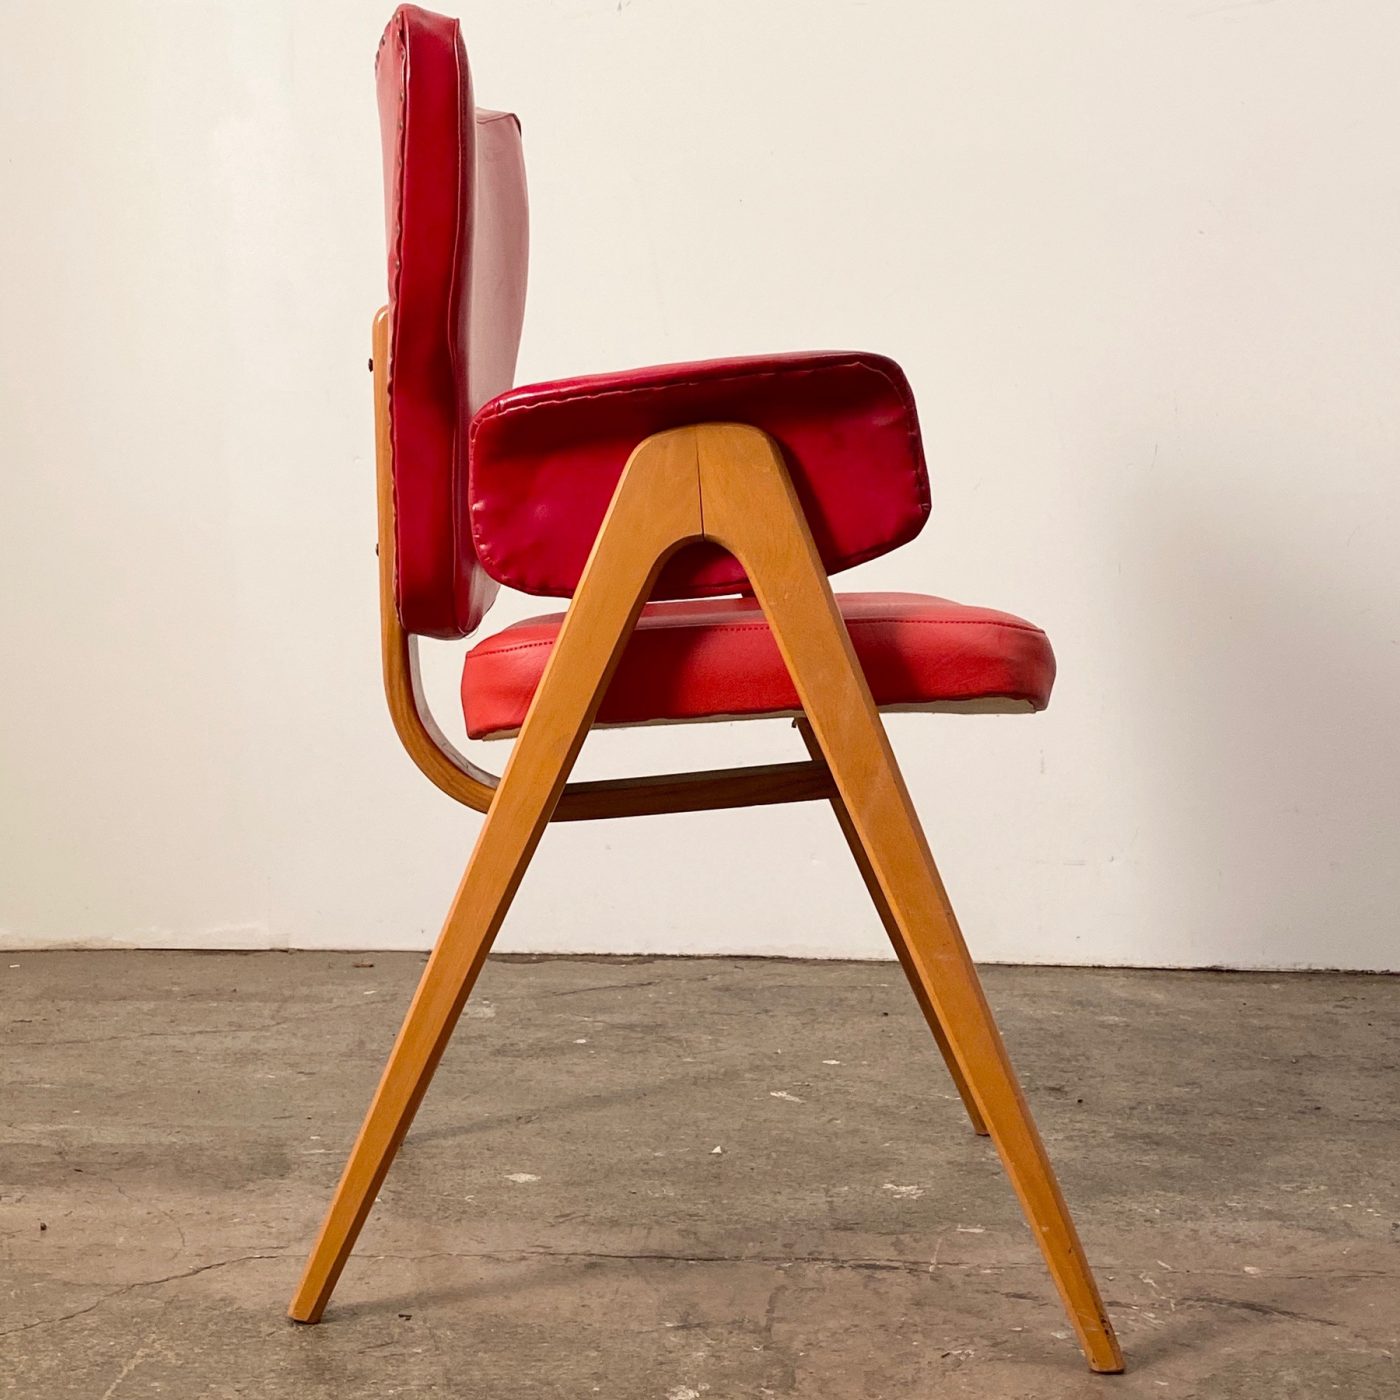 objet-vagabond-vintage-chairs0004